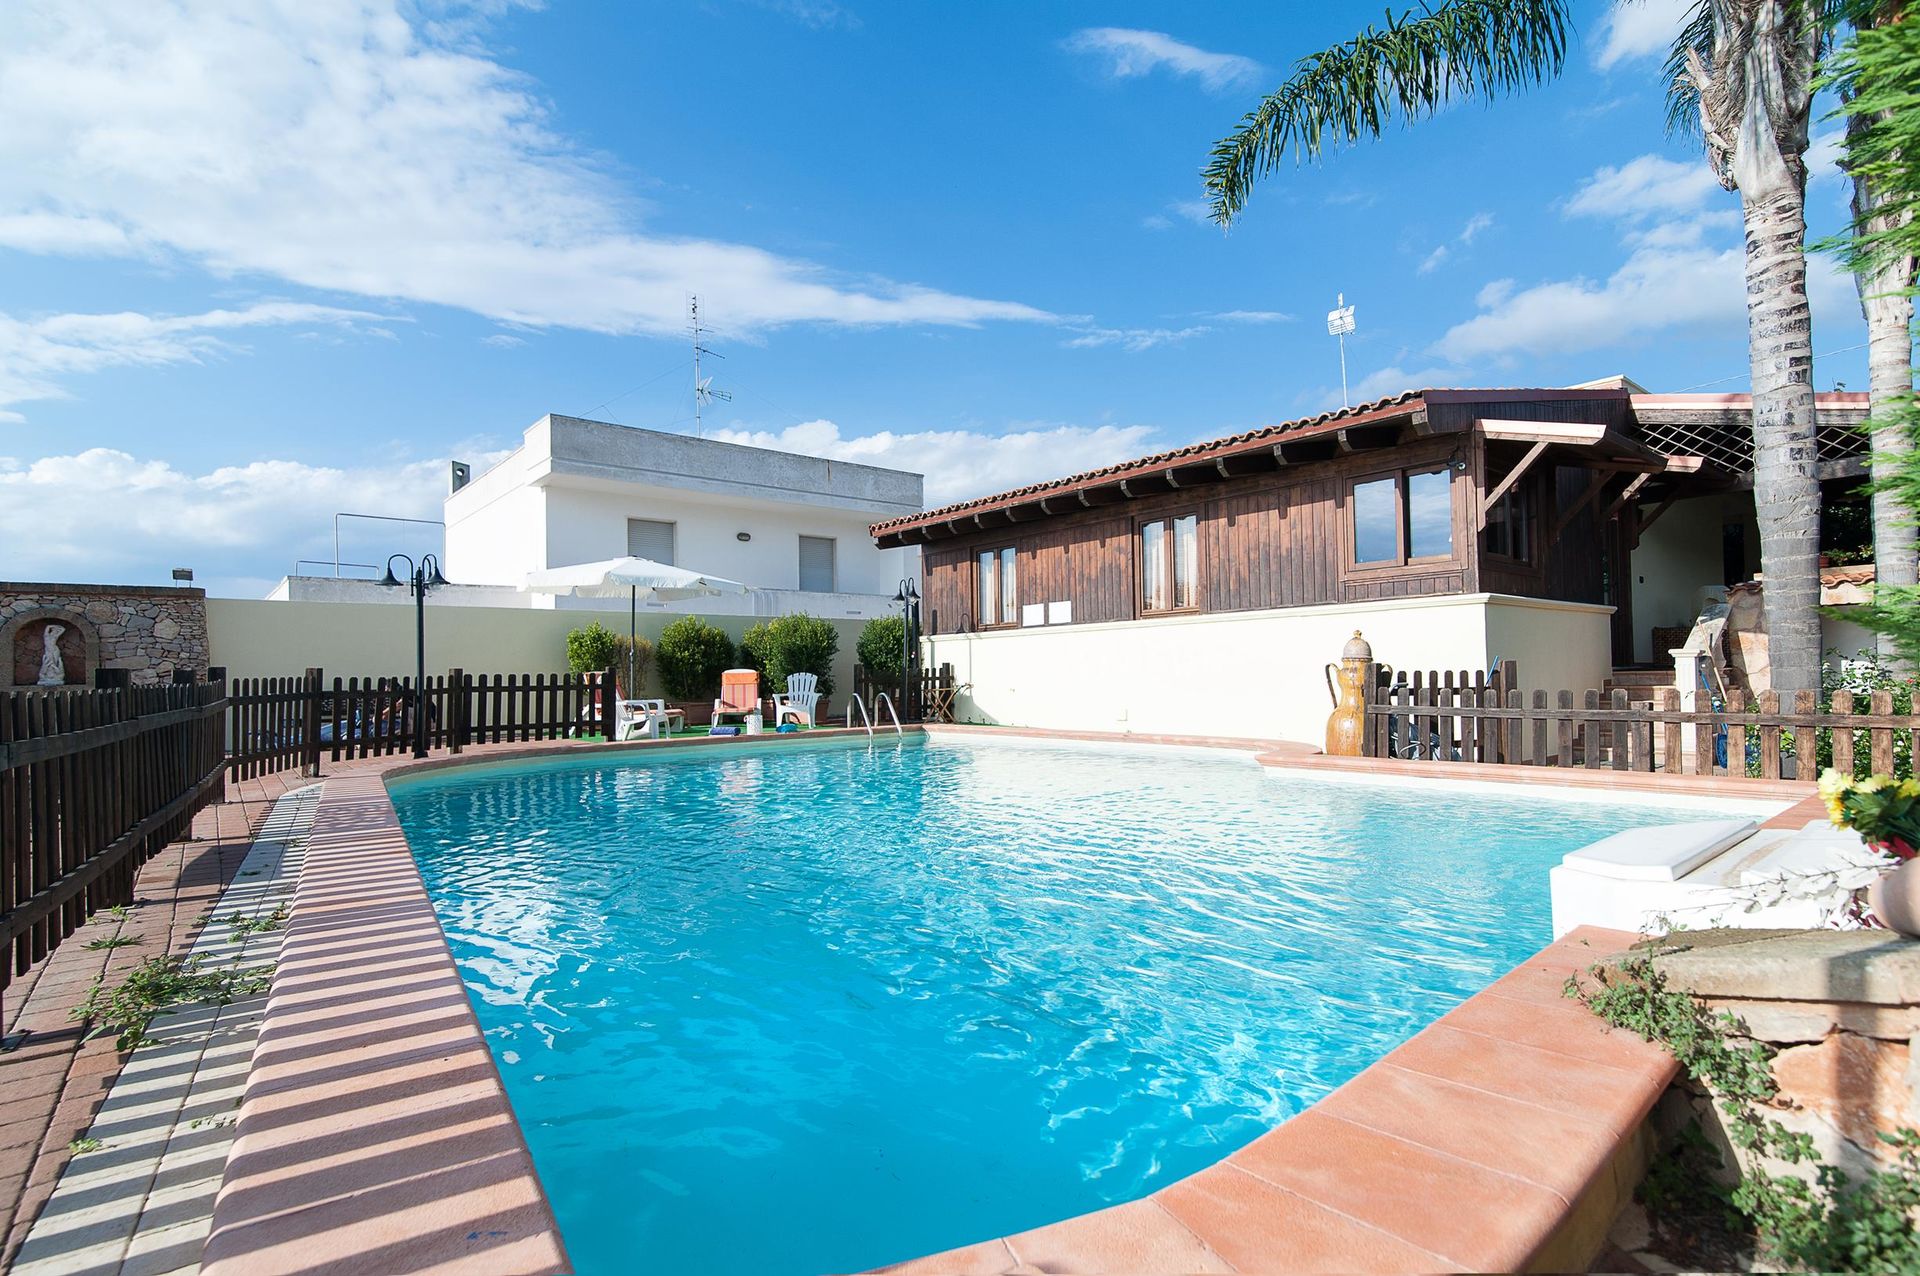 Luxury Pool Chalet, Villa vacation rental in Marina Di Mancaversa ...